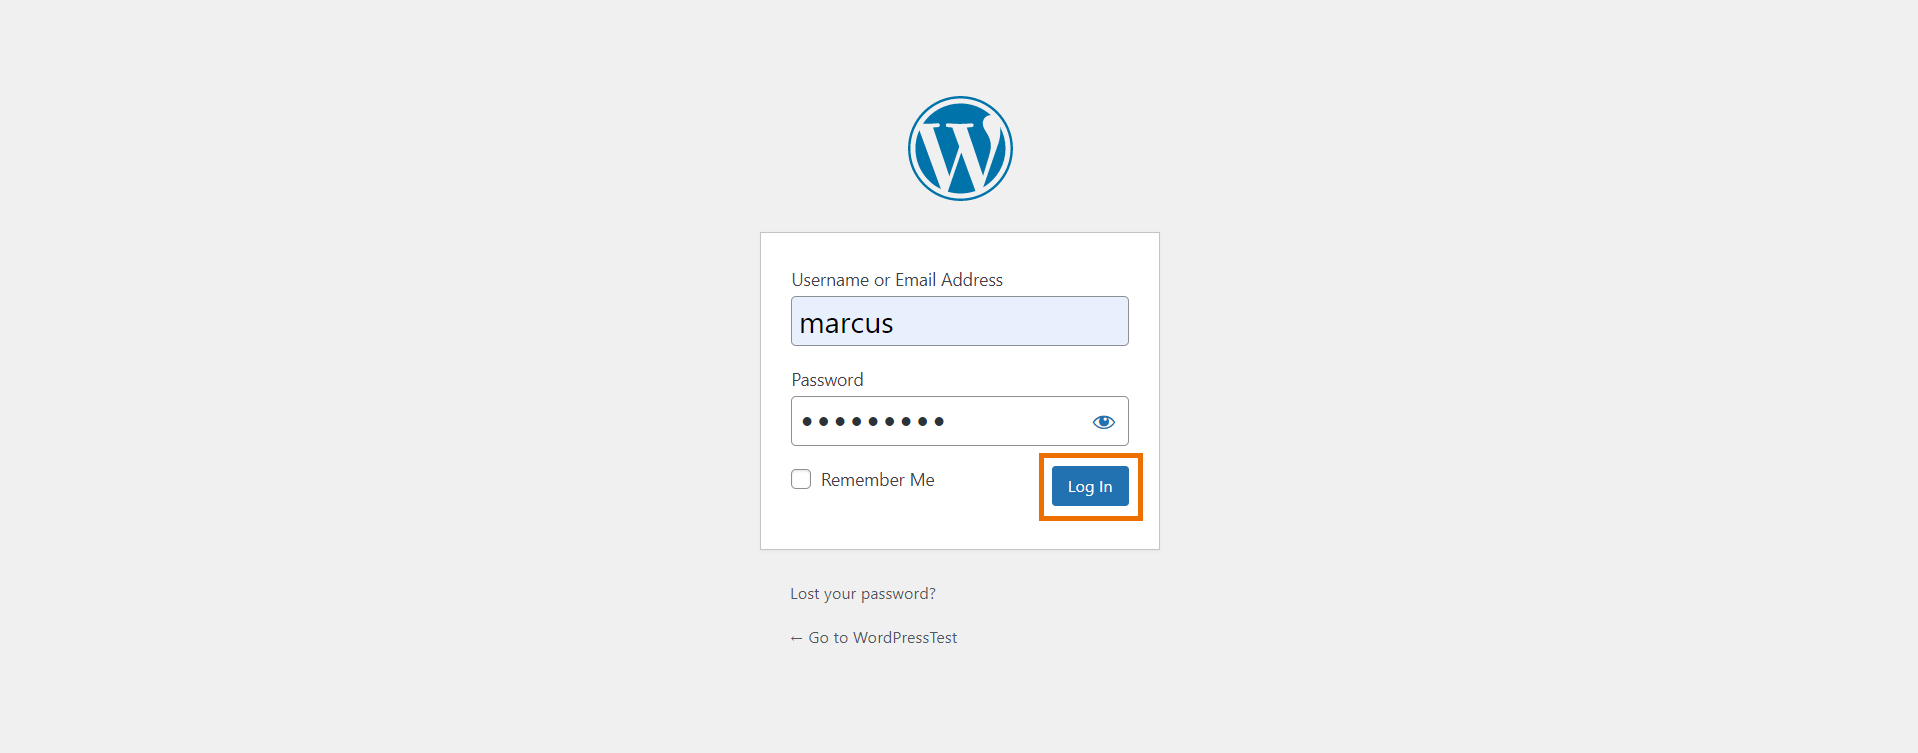 WordPress login for the US